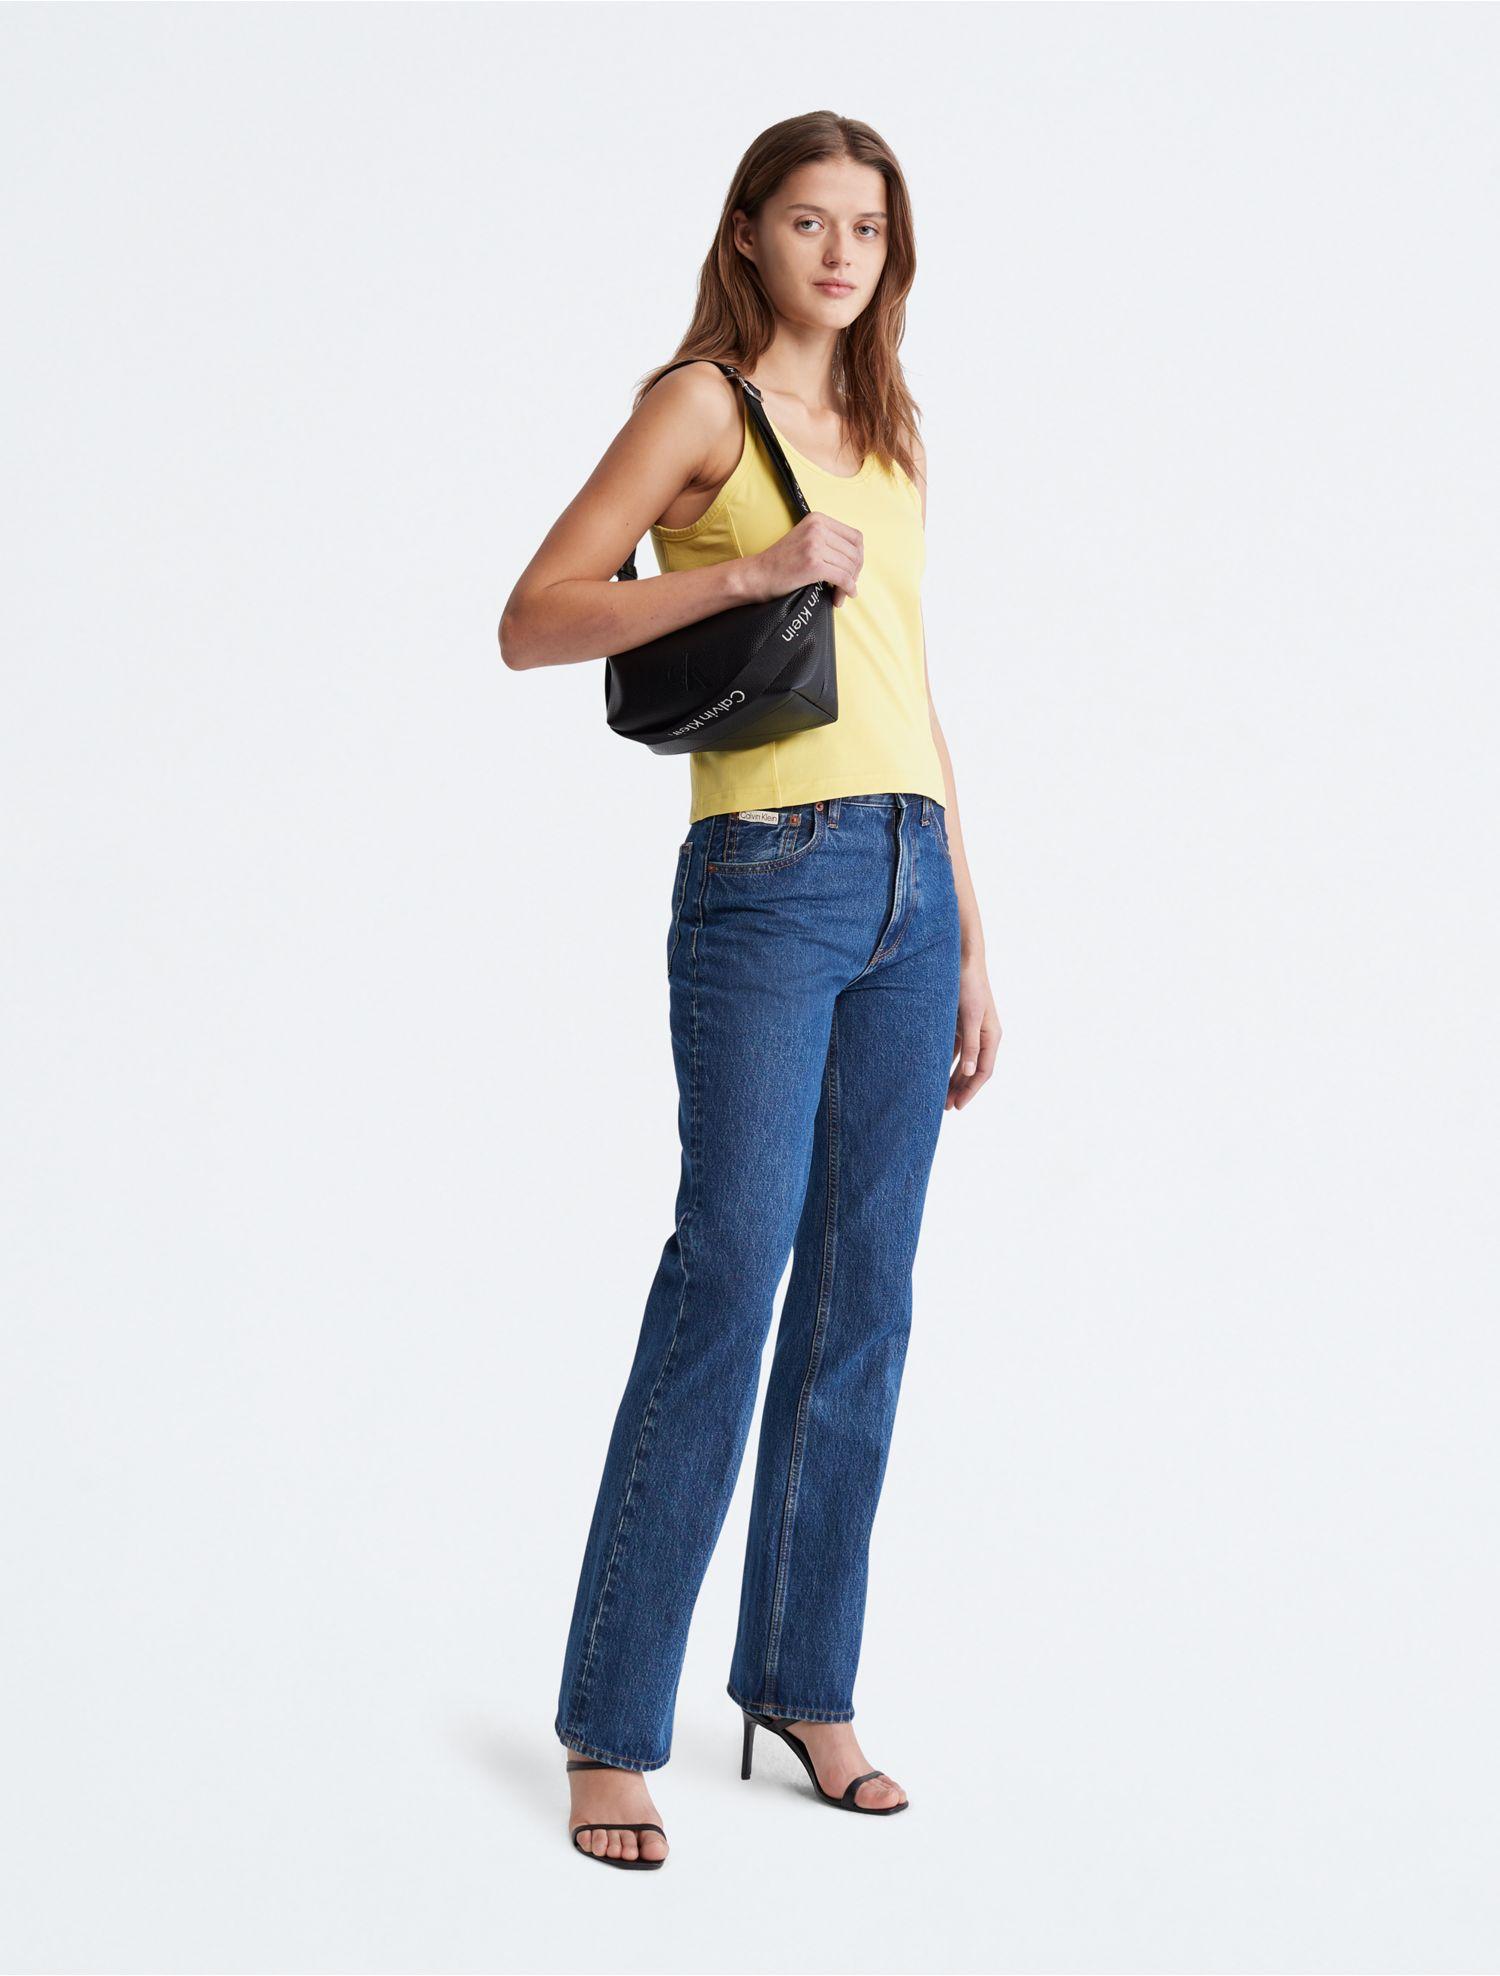 Calvin Klein Jeans nylon shoulder bag in green